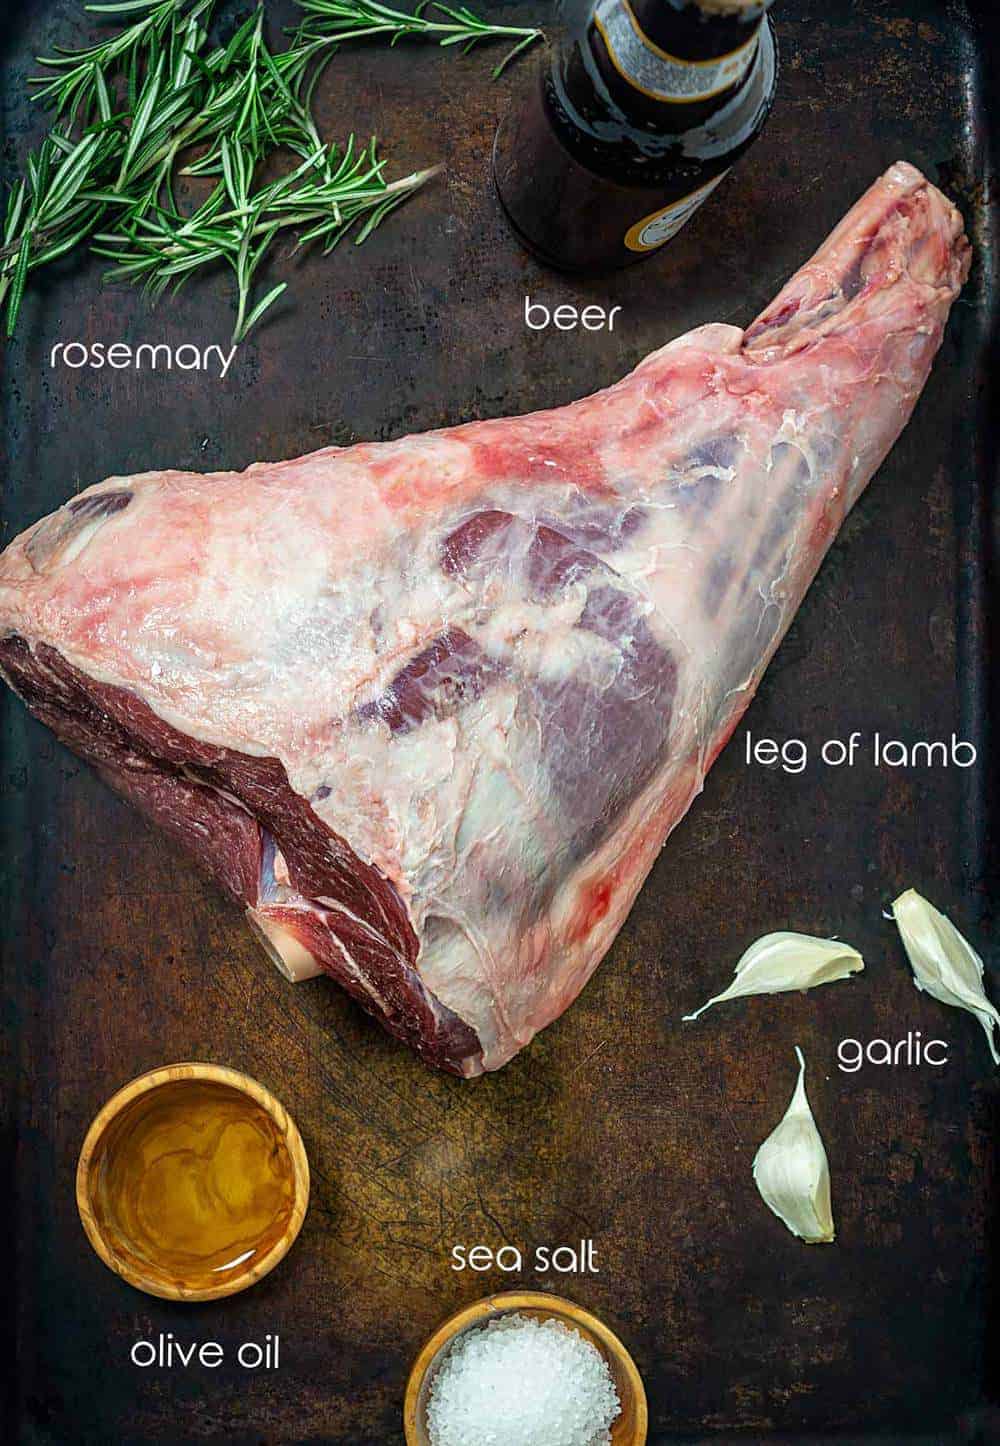 Ingredients for lamb roast with lamb leg, rosemary, garlic, salt, and beer.